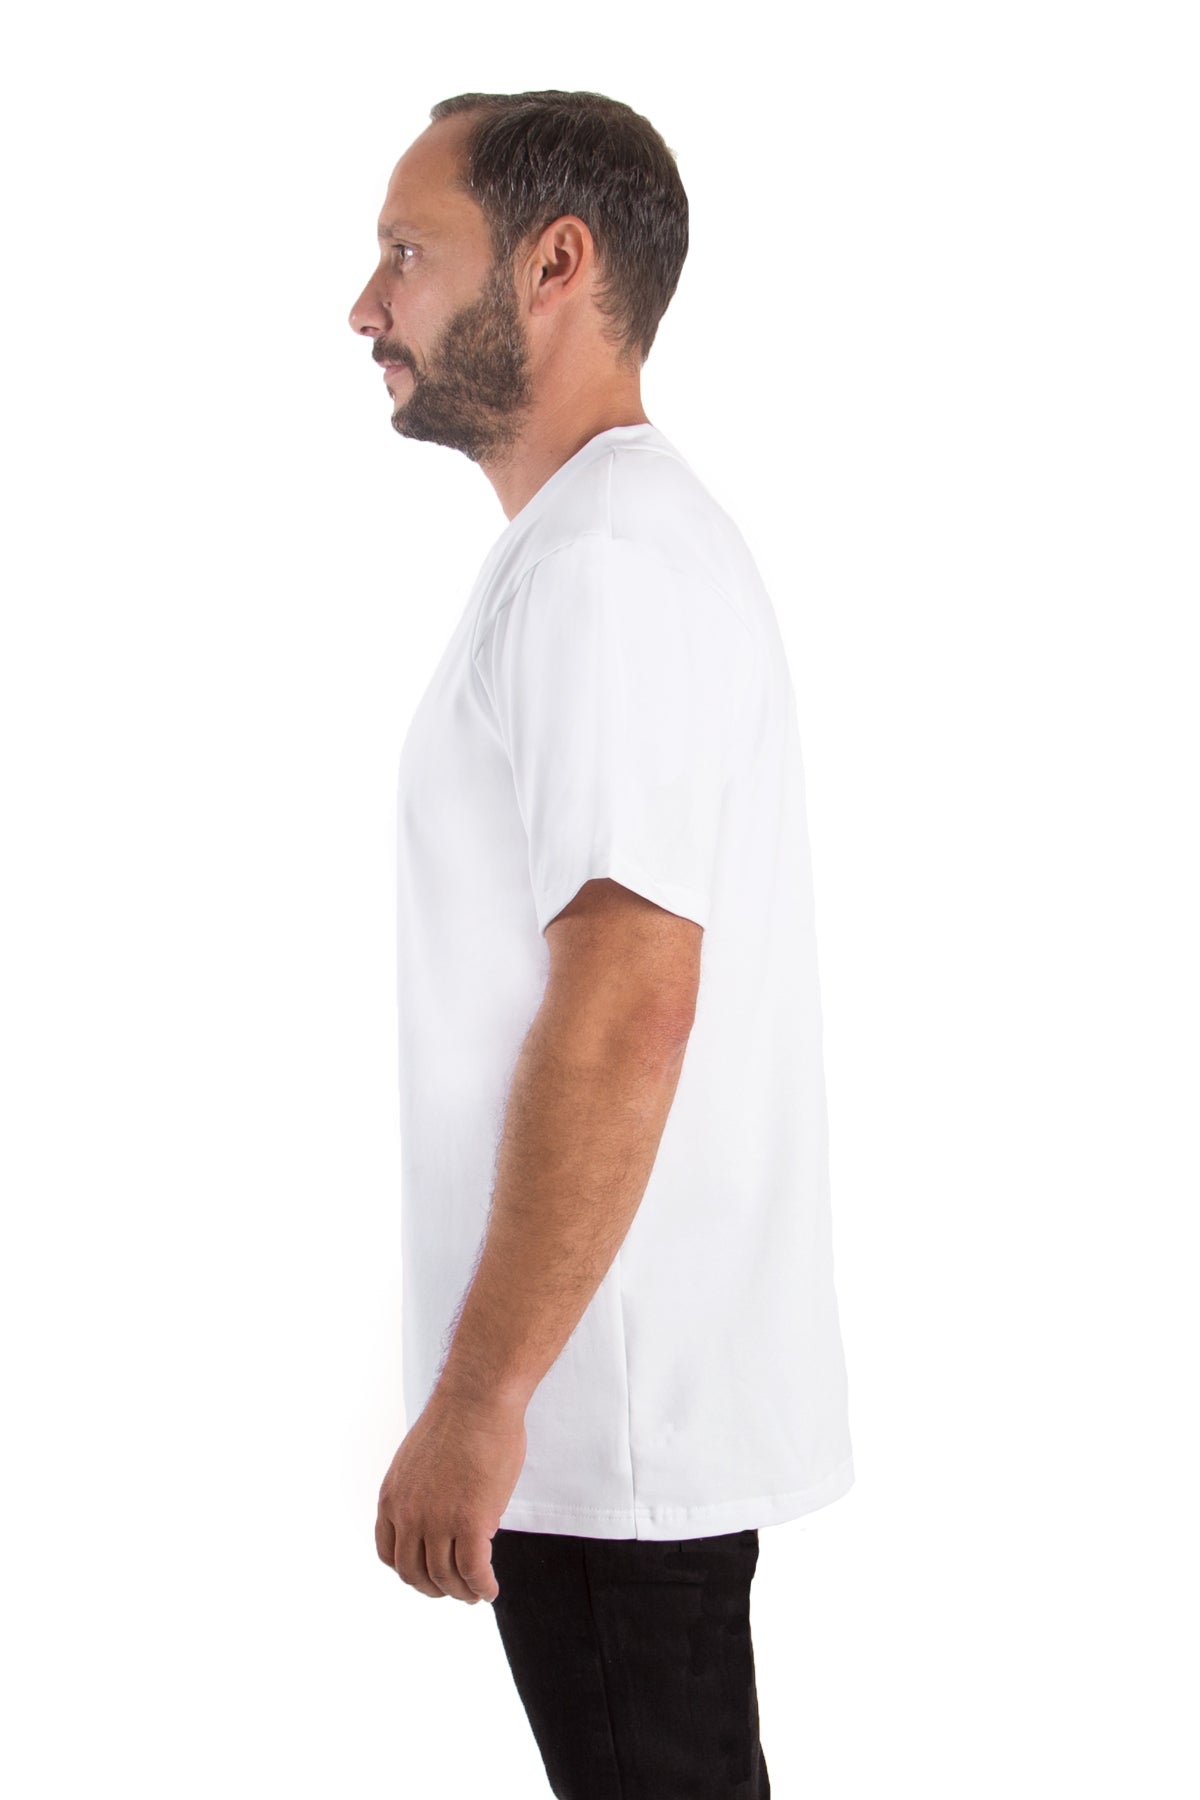 T-Shirt V-Neck (10er-Pack) - royal